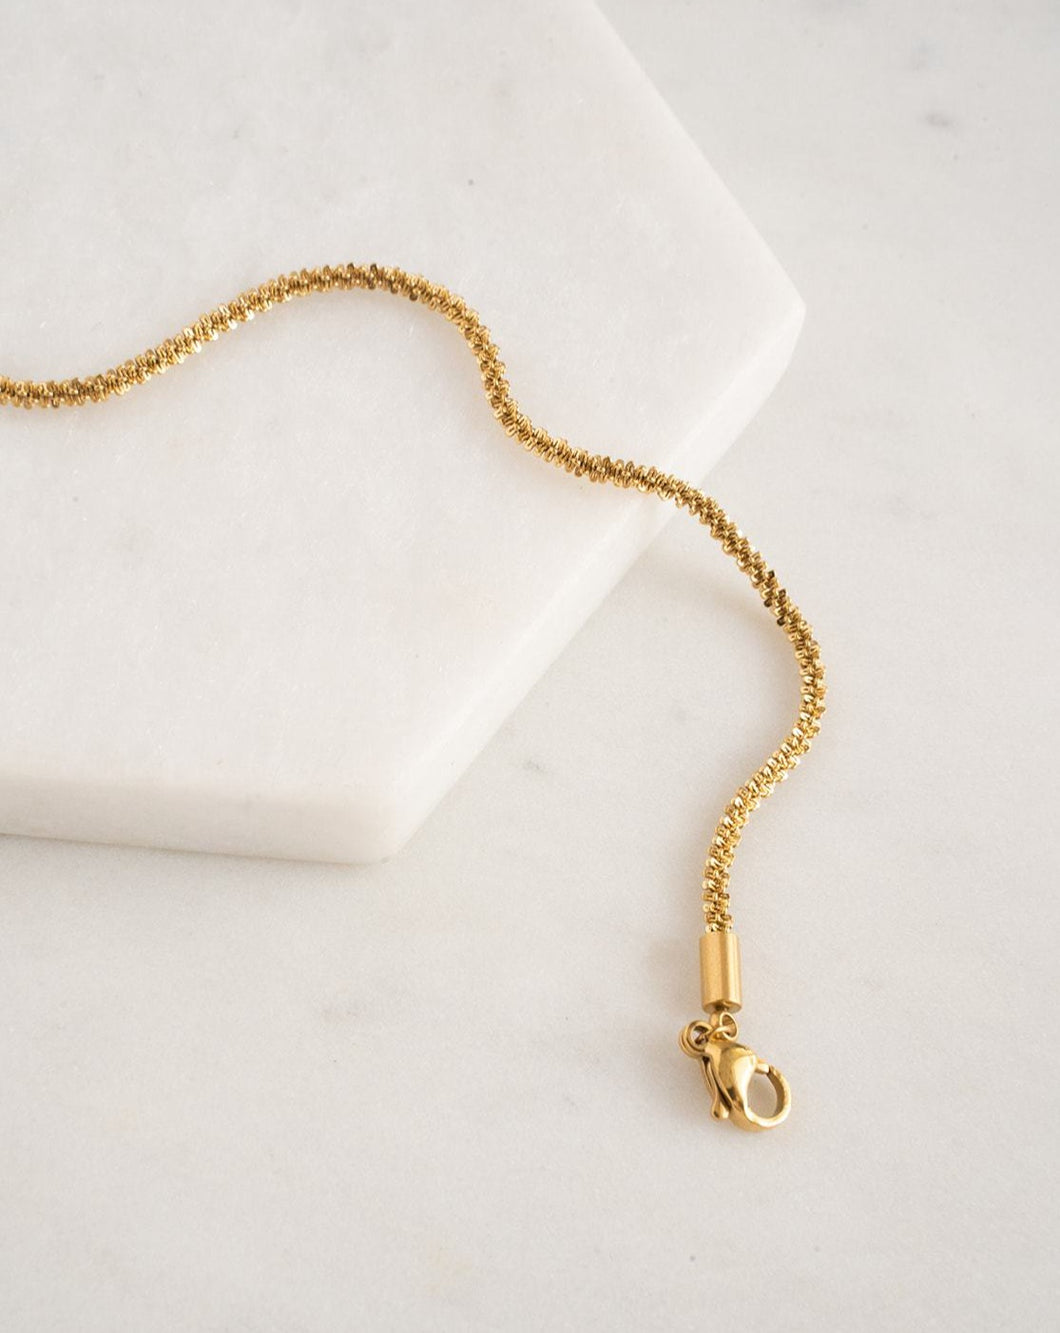 Minimal and but elegant 18k gold plated chain bracelet